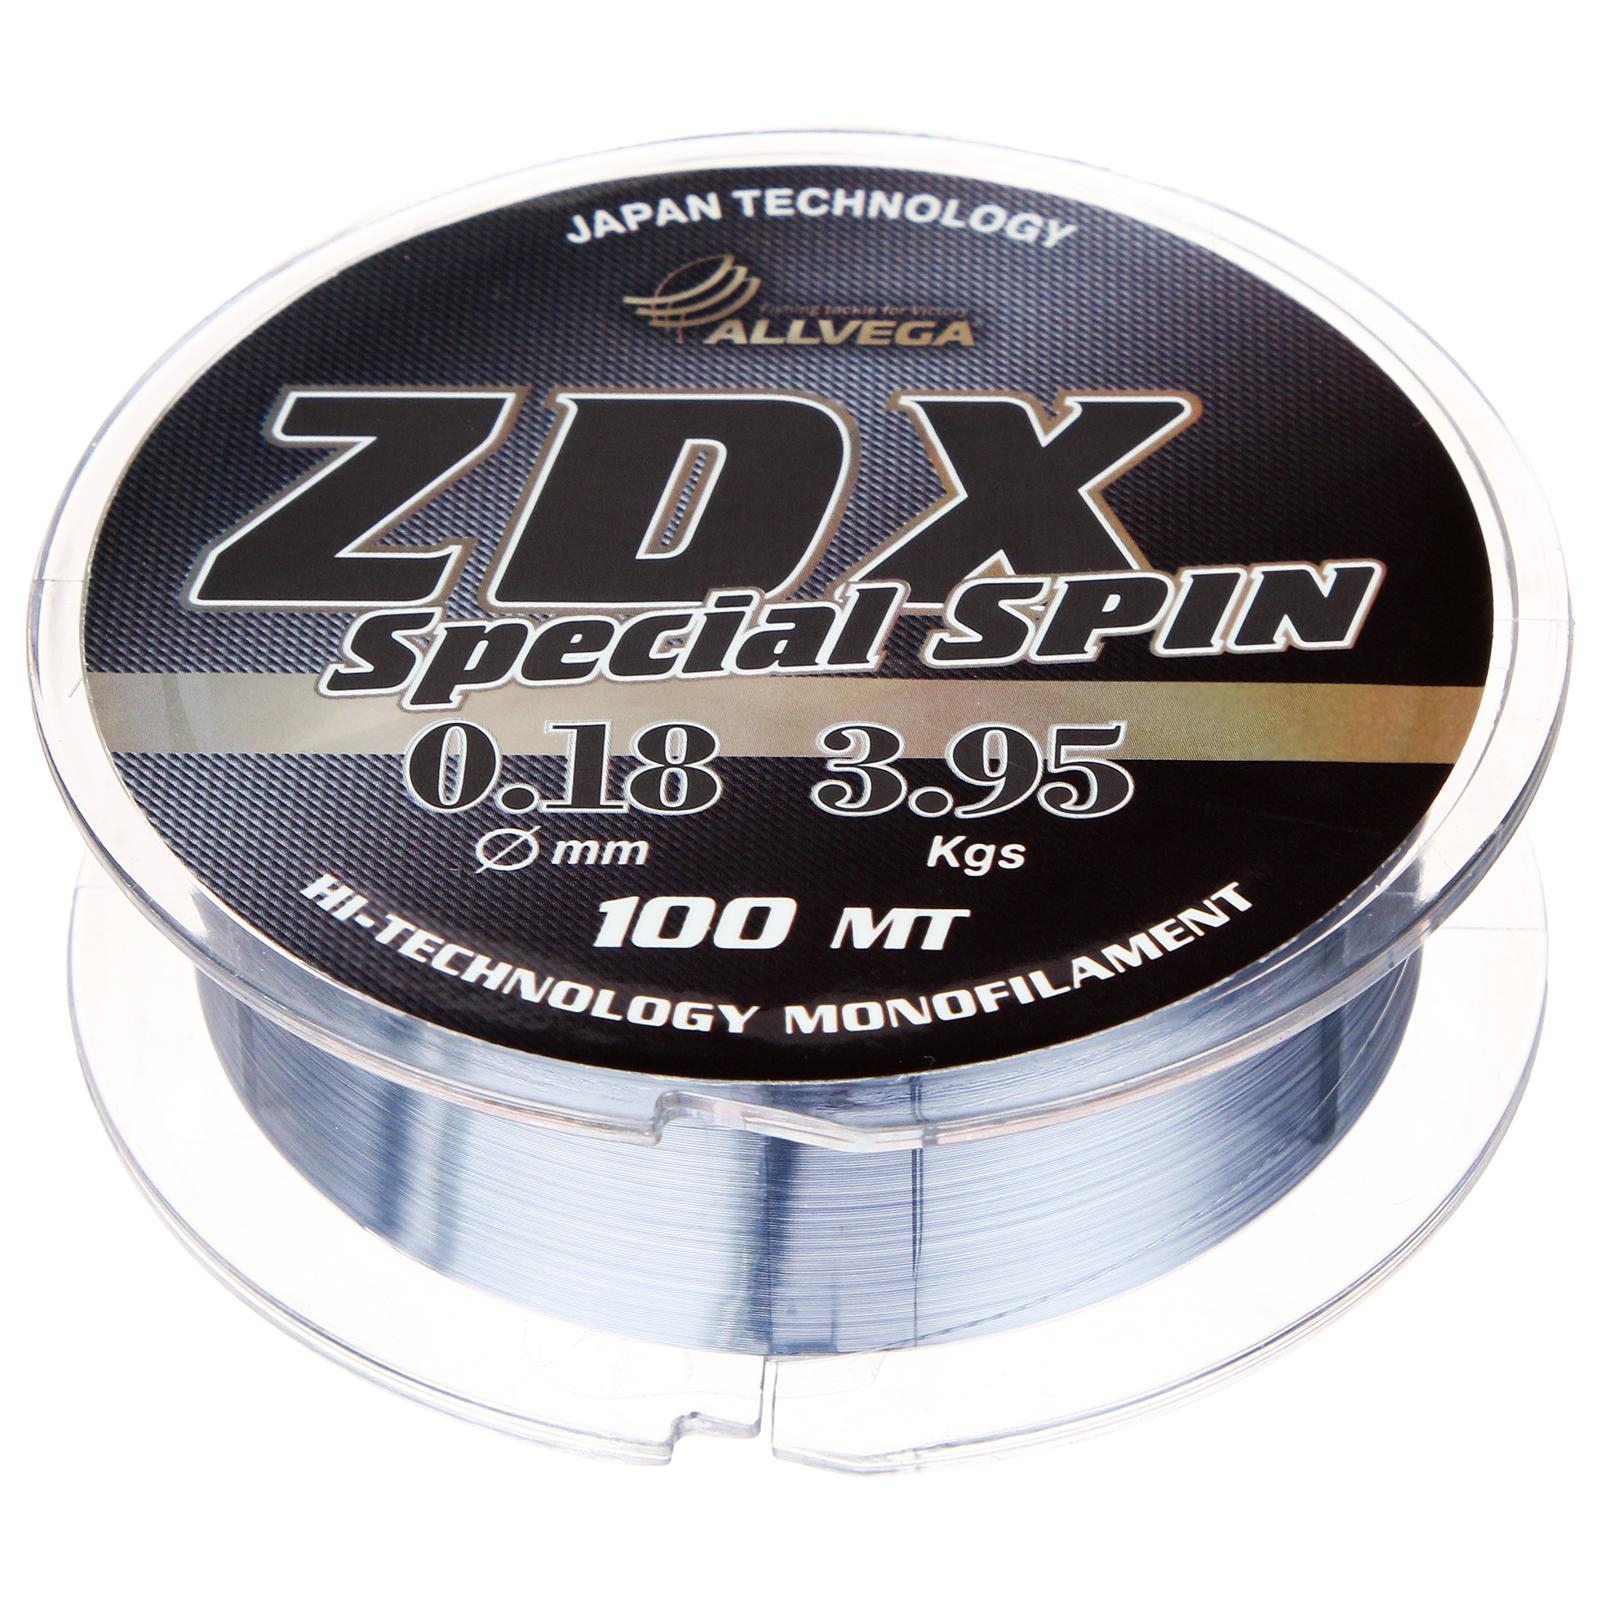  Allvega ZDX Special spin 0.18, 100 м за 262 ₽  в интернет .